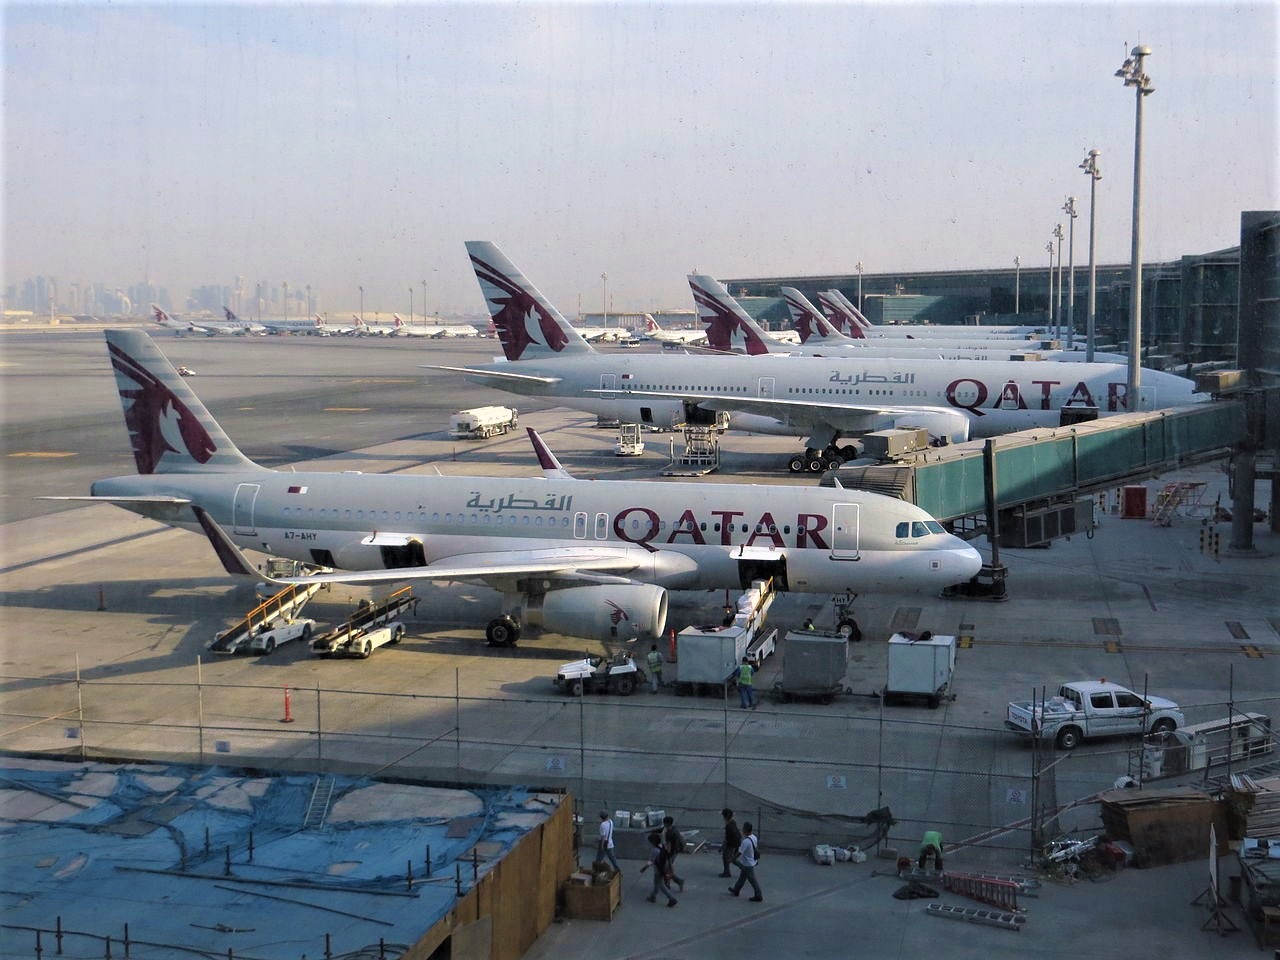 Qatar Airways Aircraft On The Apron 